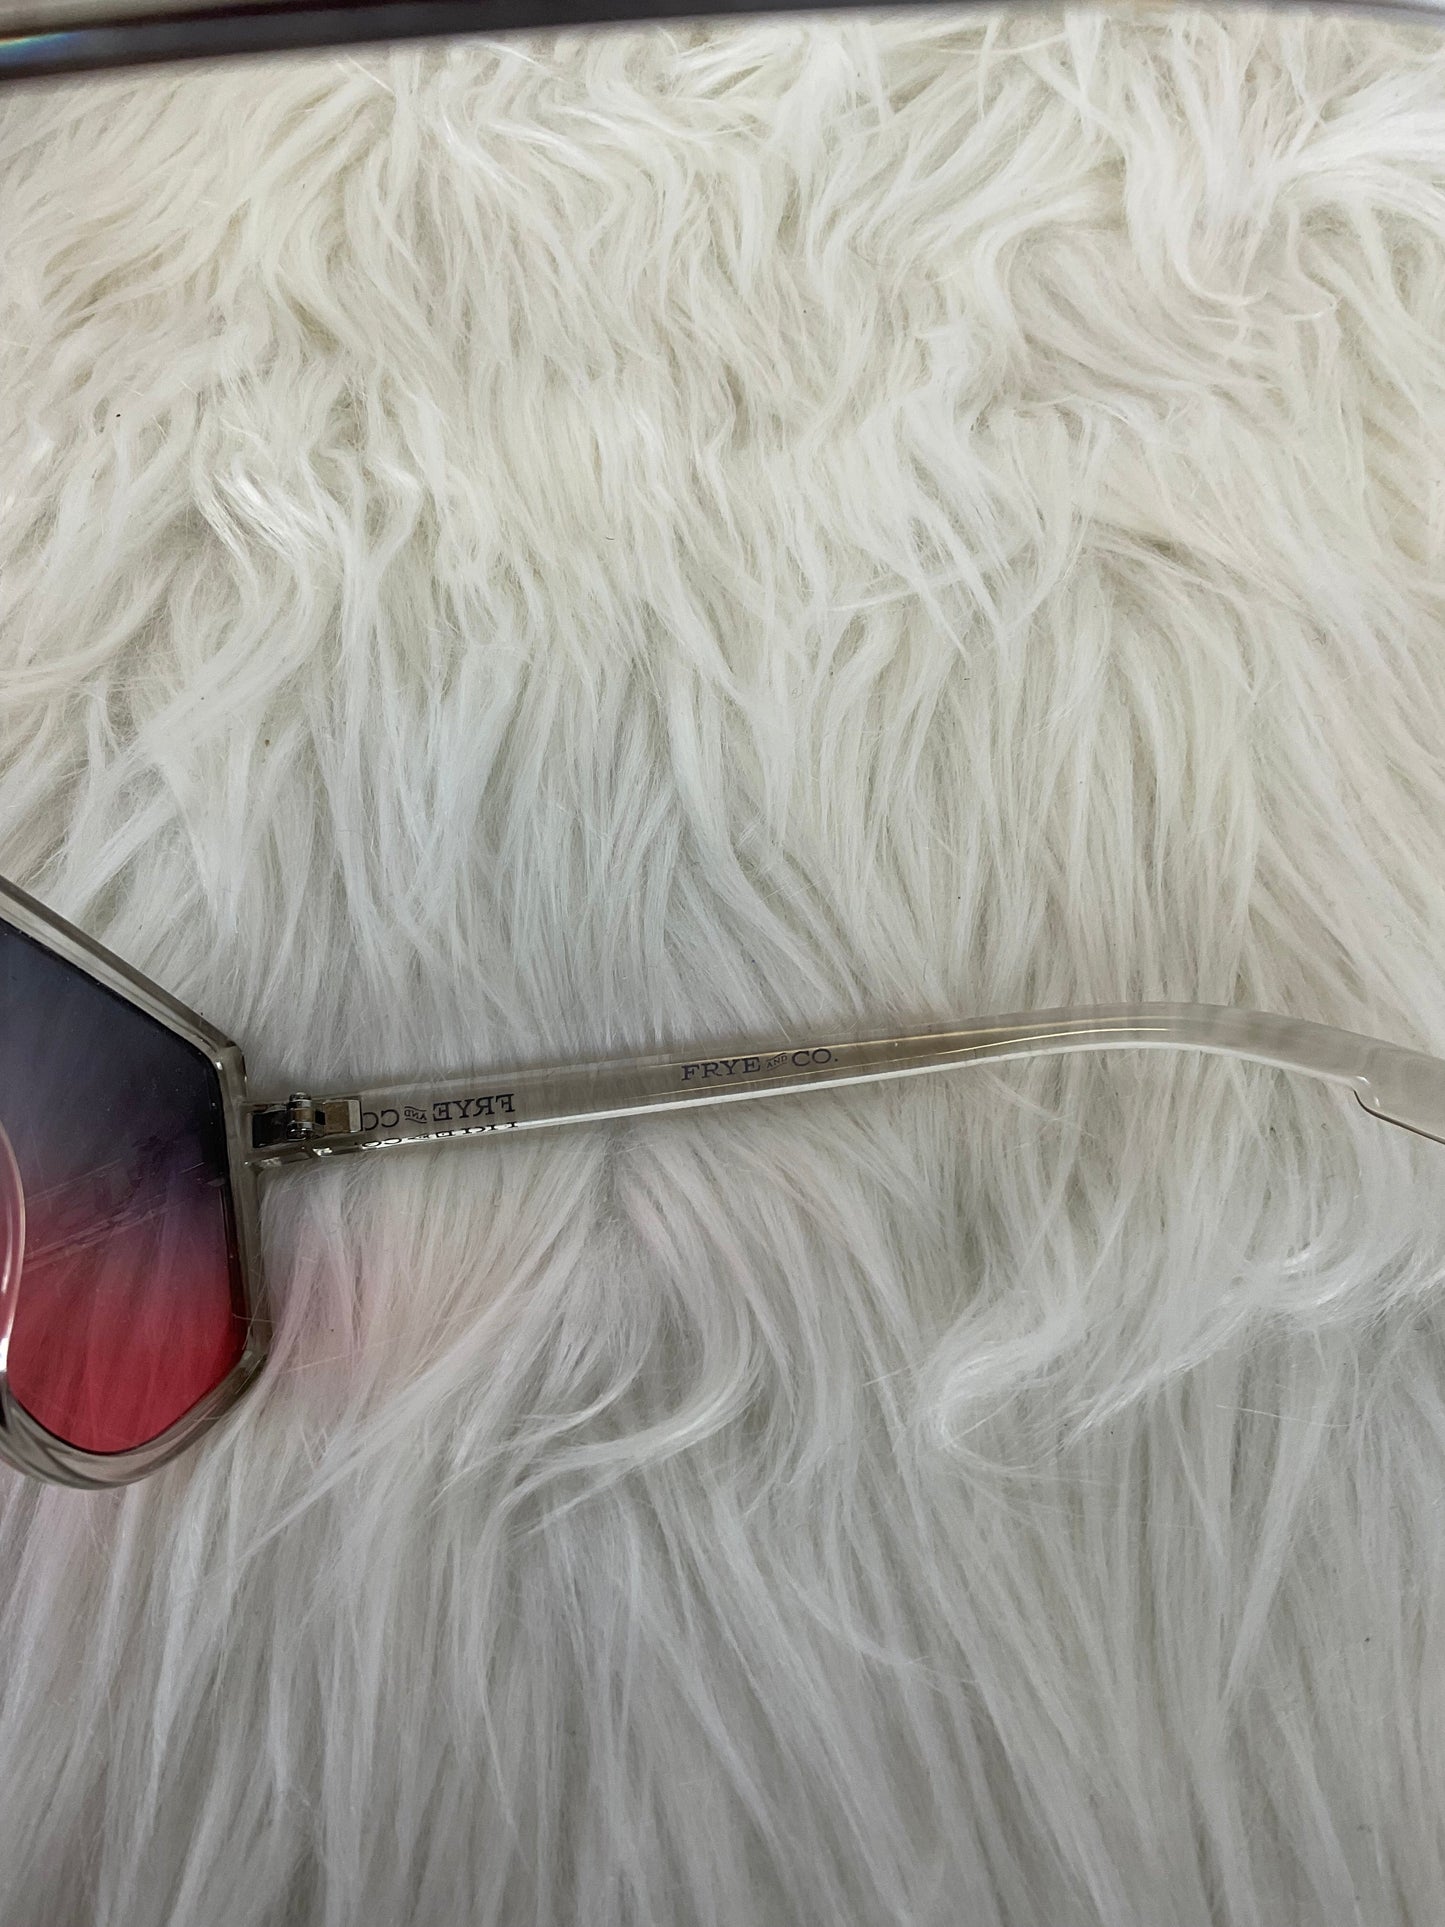 Sunglasses Designer Frye, Size 01 Piece